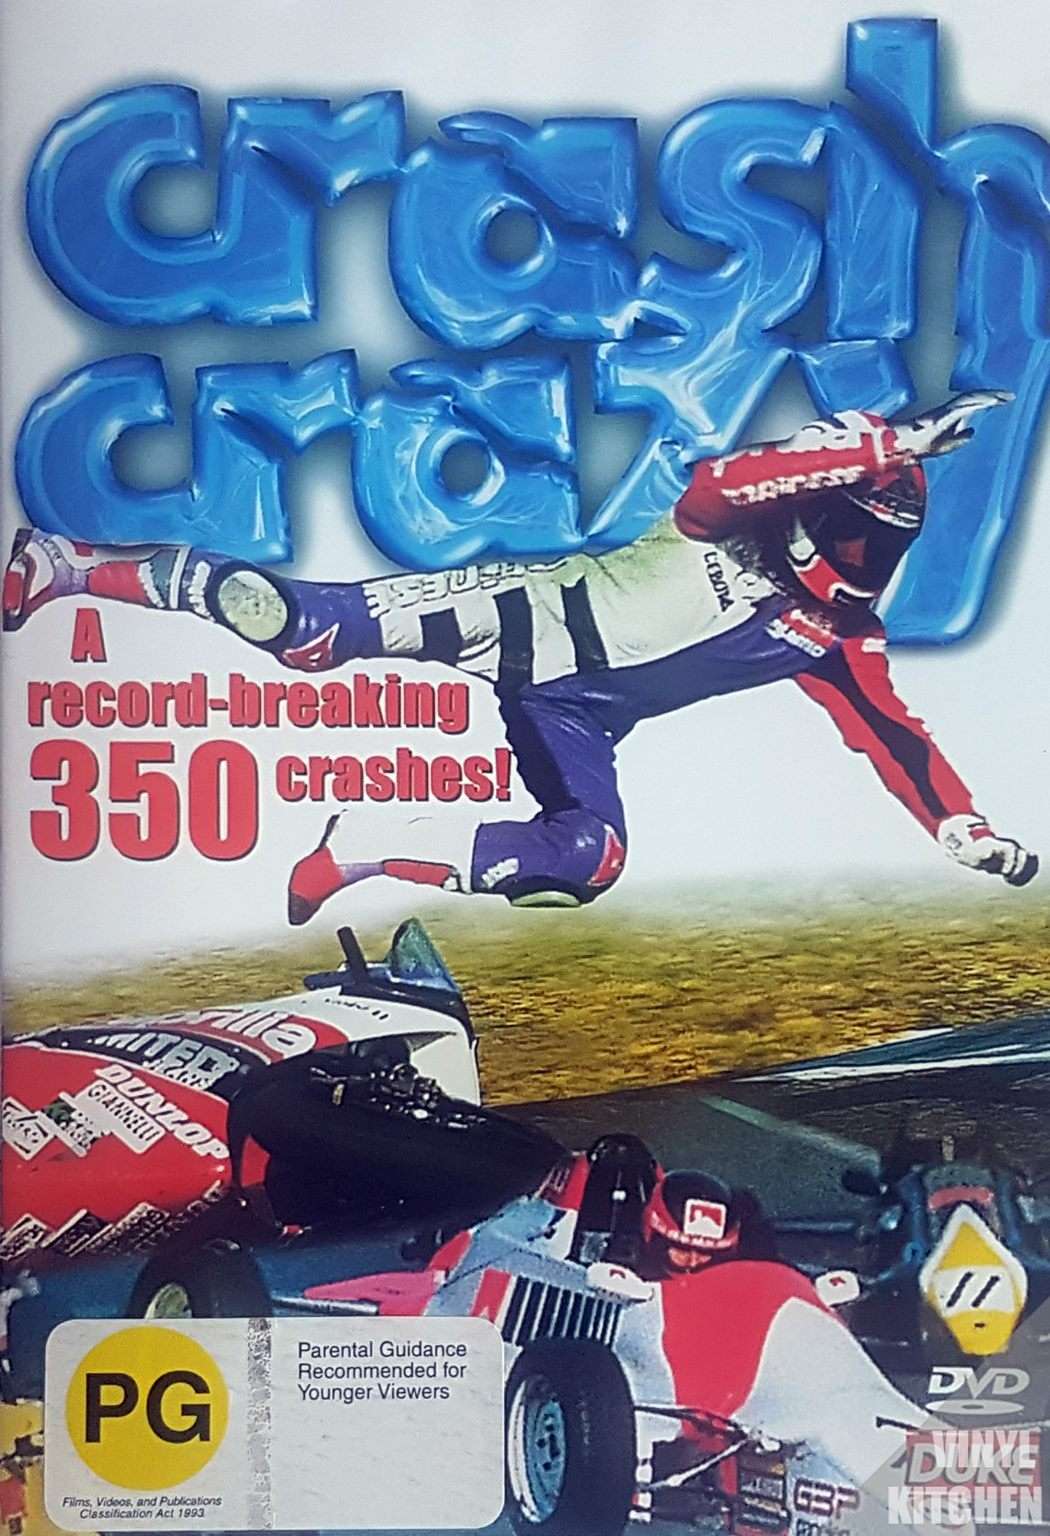 Crash Crazy Over 350 Crashes!